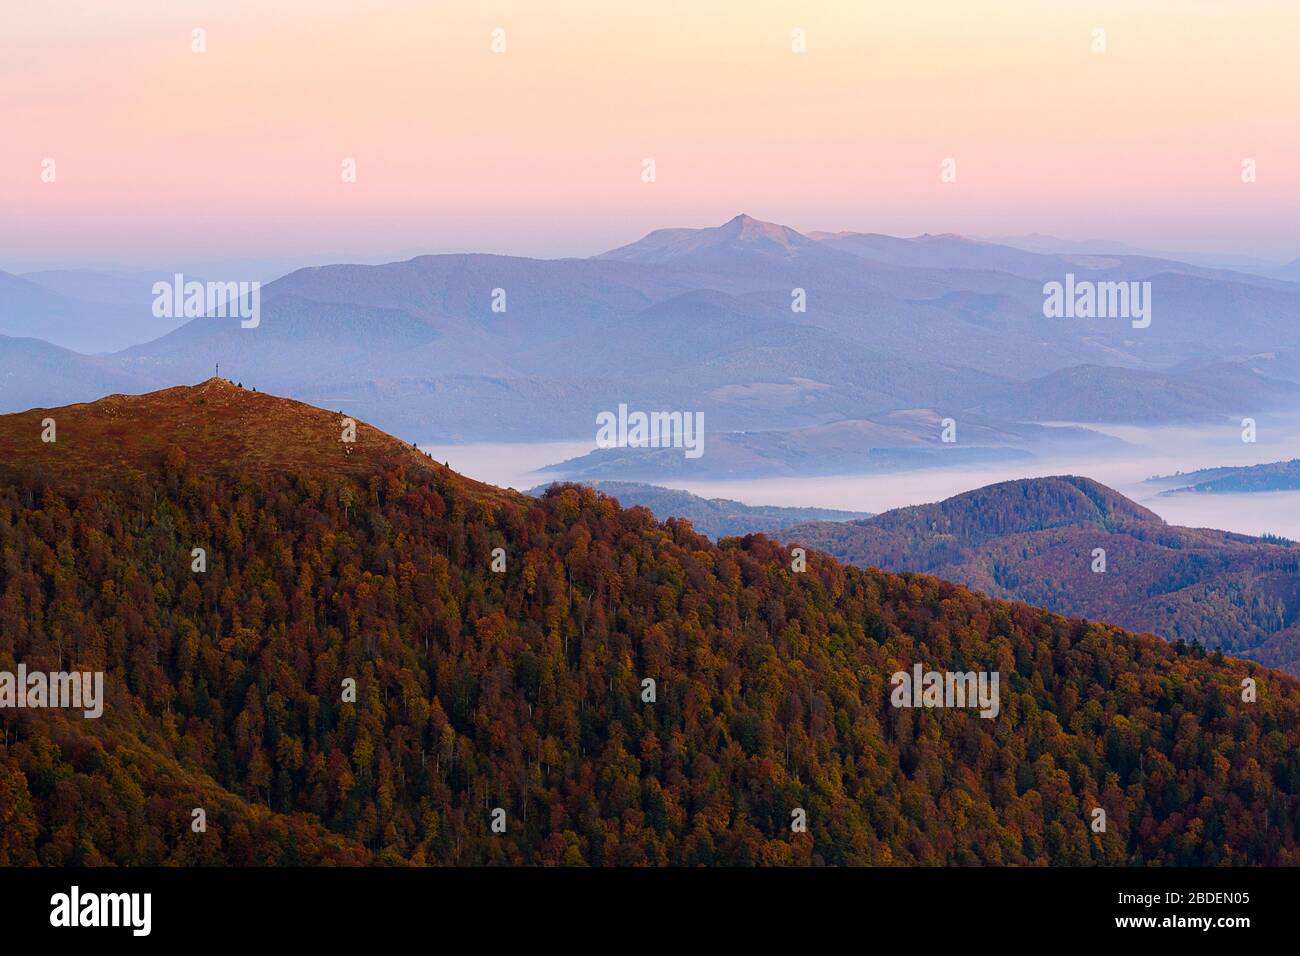 Vista desde la montaña Plai, Borzhava, Cárpatos, región de Zakarpattia, Ucrania, 2019 Foto de stock